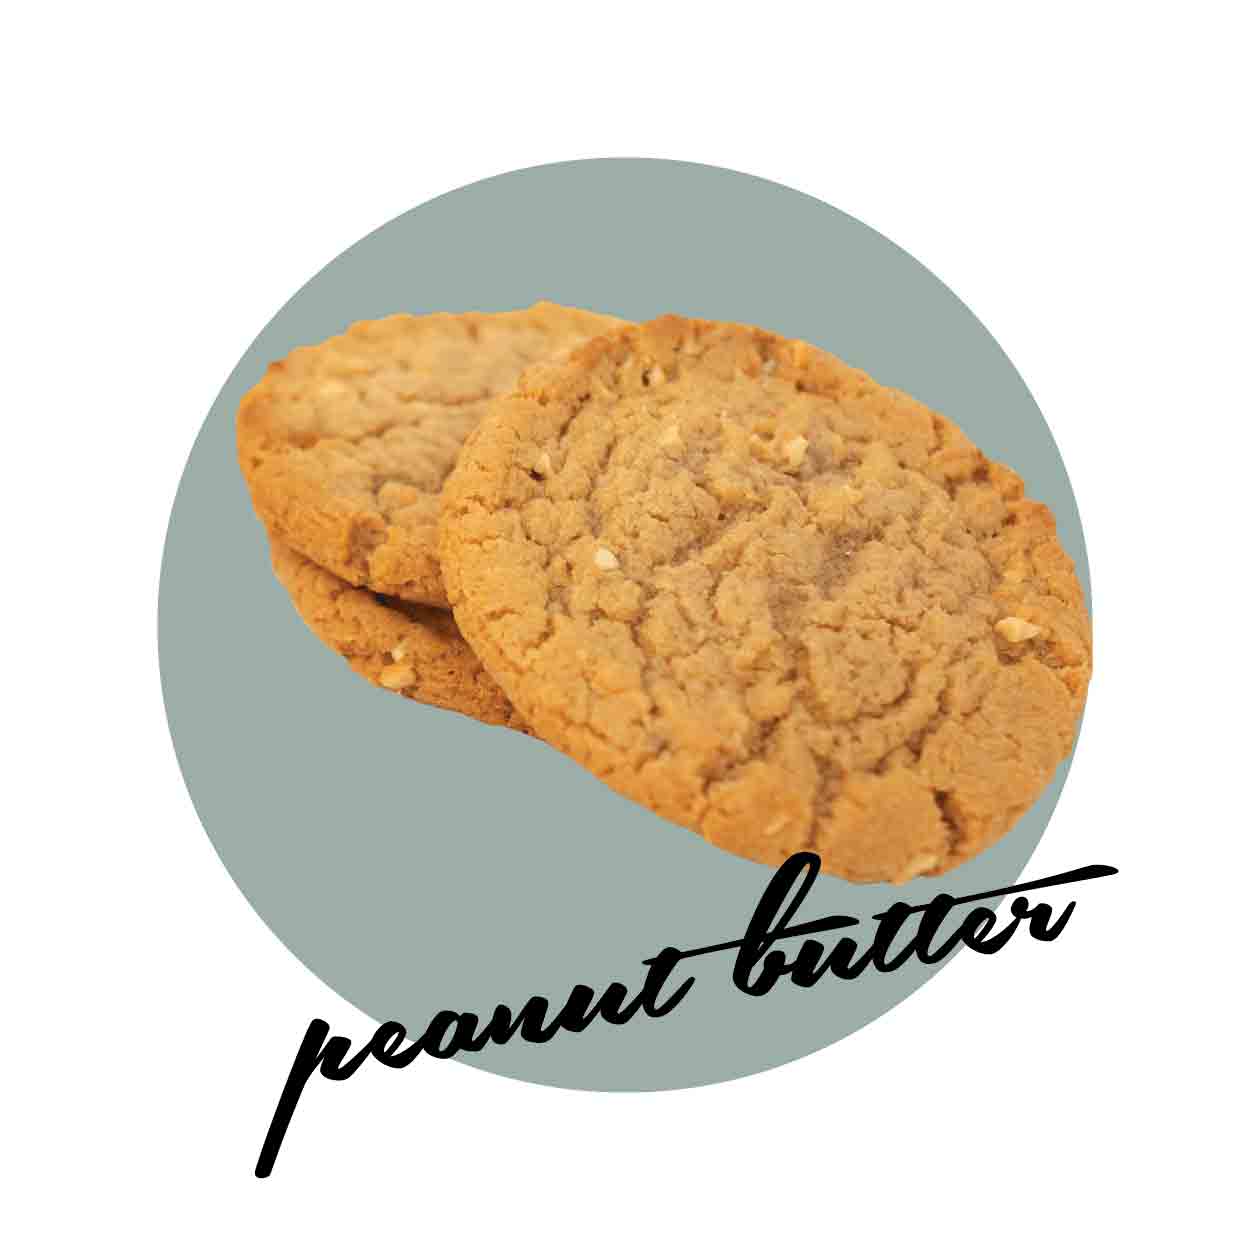 Peanut Butter cookies